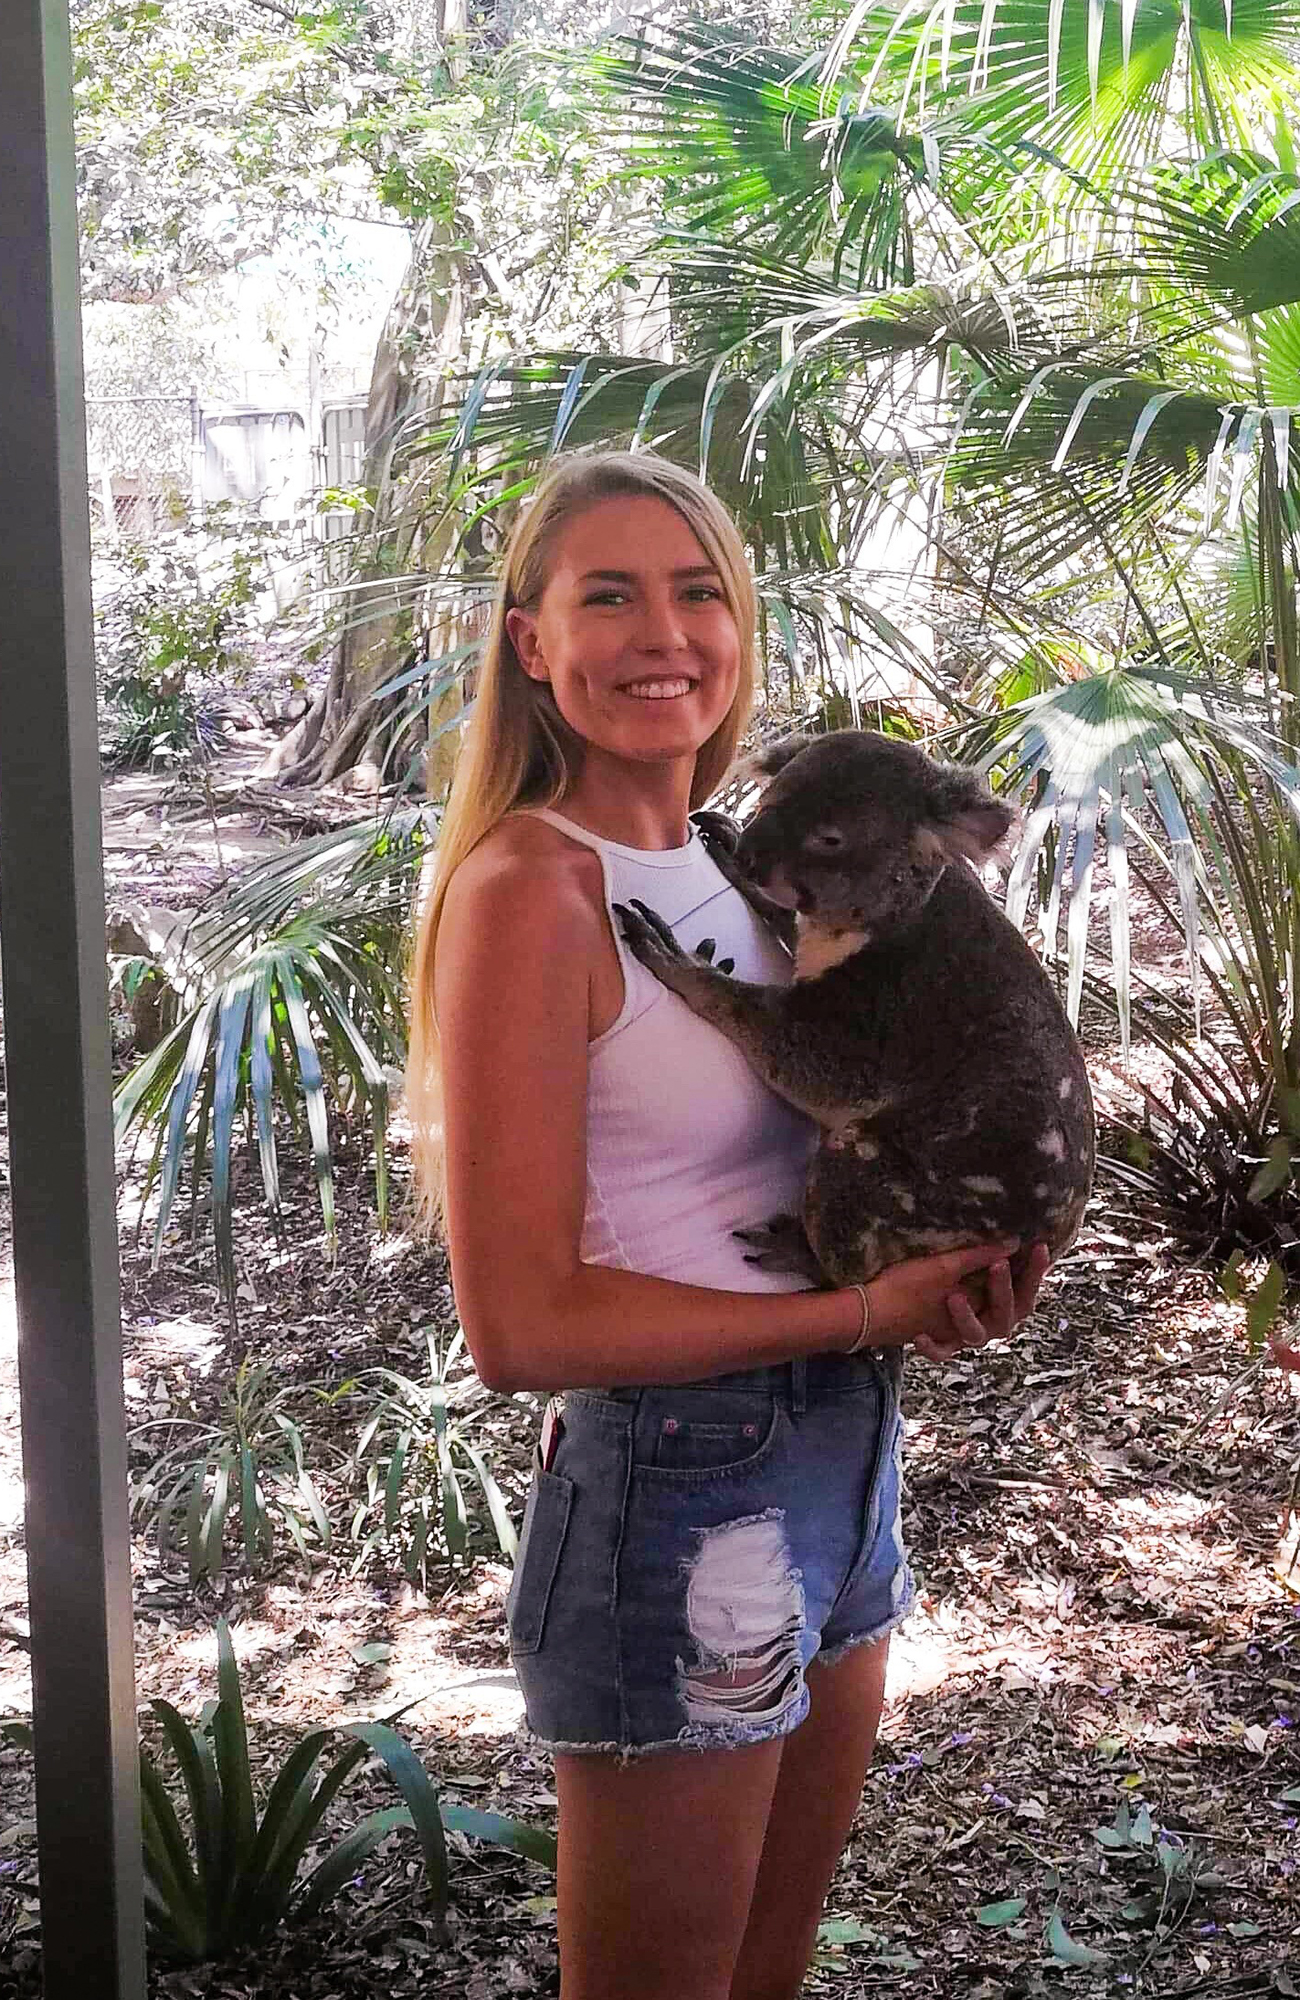 malin a student at tafe in australia holding a koala